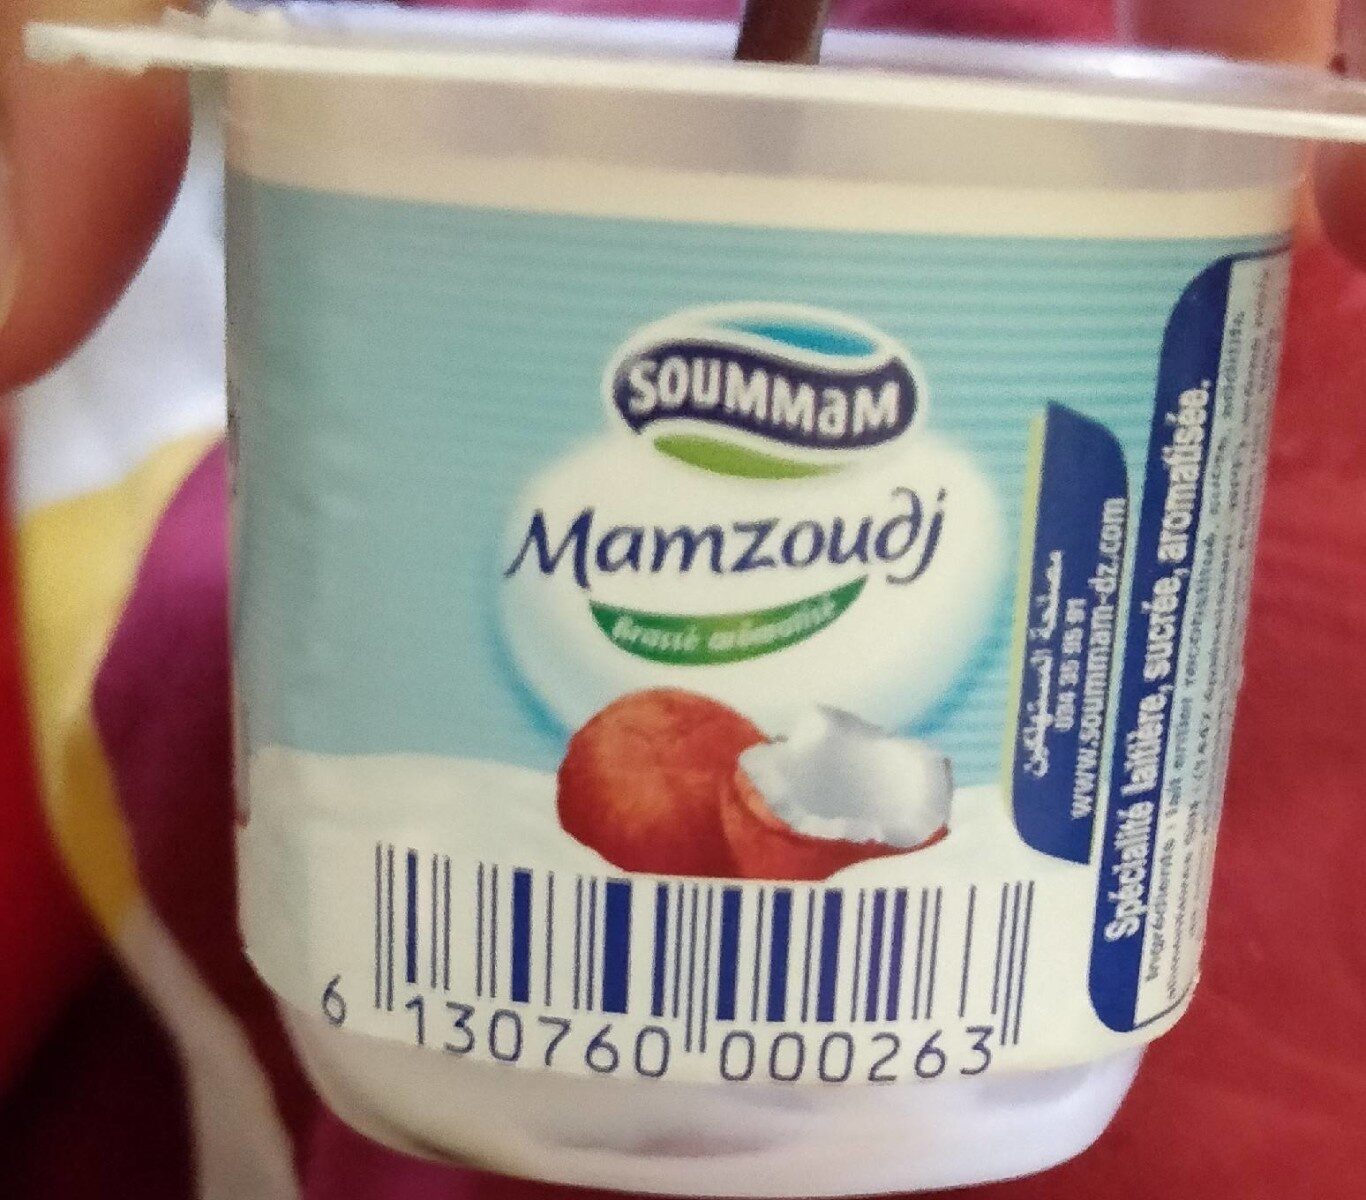 Yaourt mamzoudj noix de coco - نتاج - fr